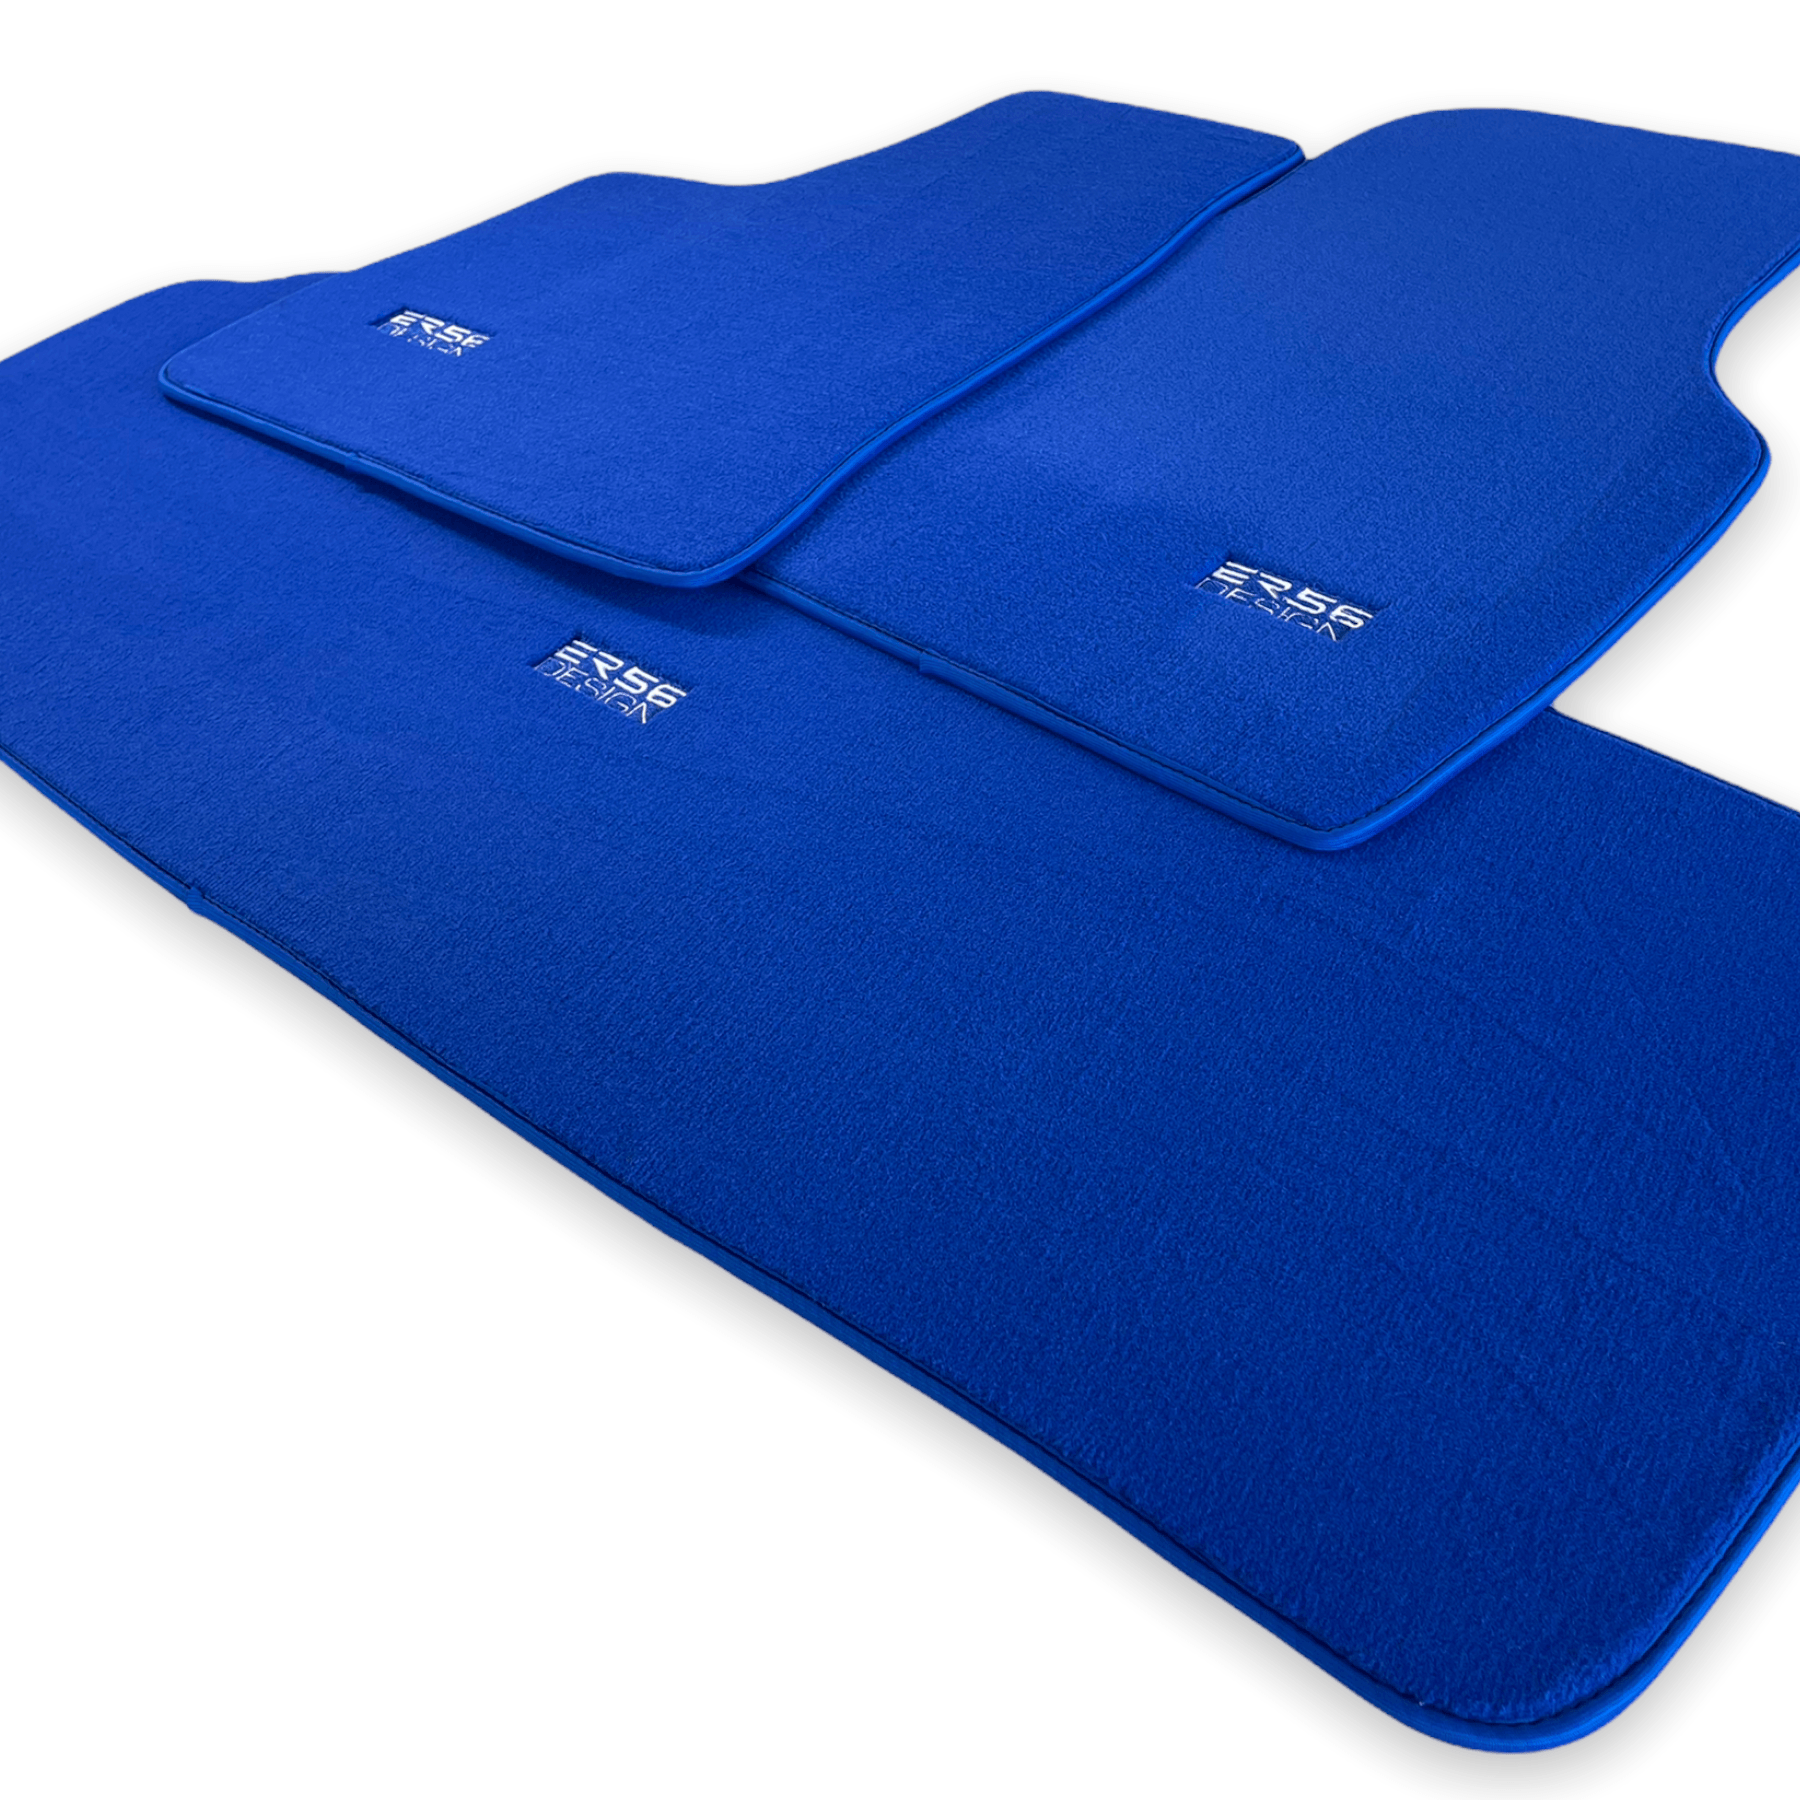 Floor Mats For Tesla Model S Blue Tailored Carpets ER56 Design - AutoWin